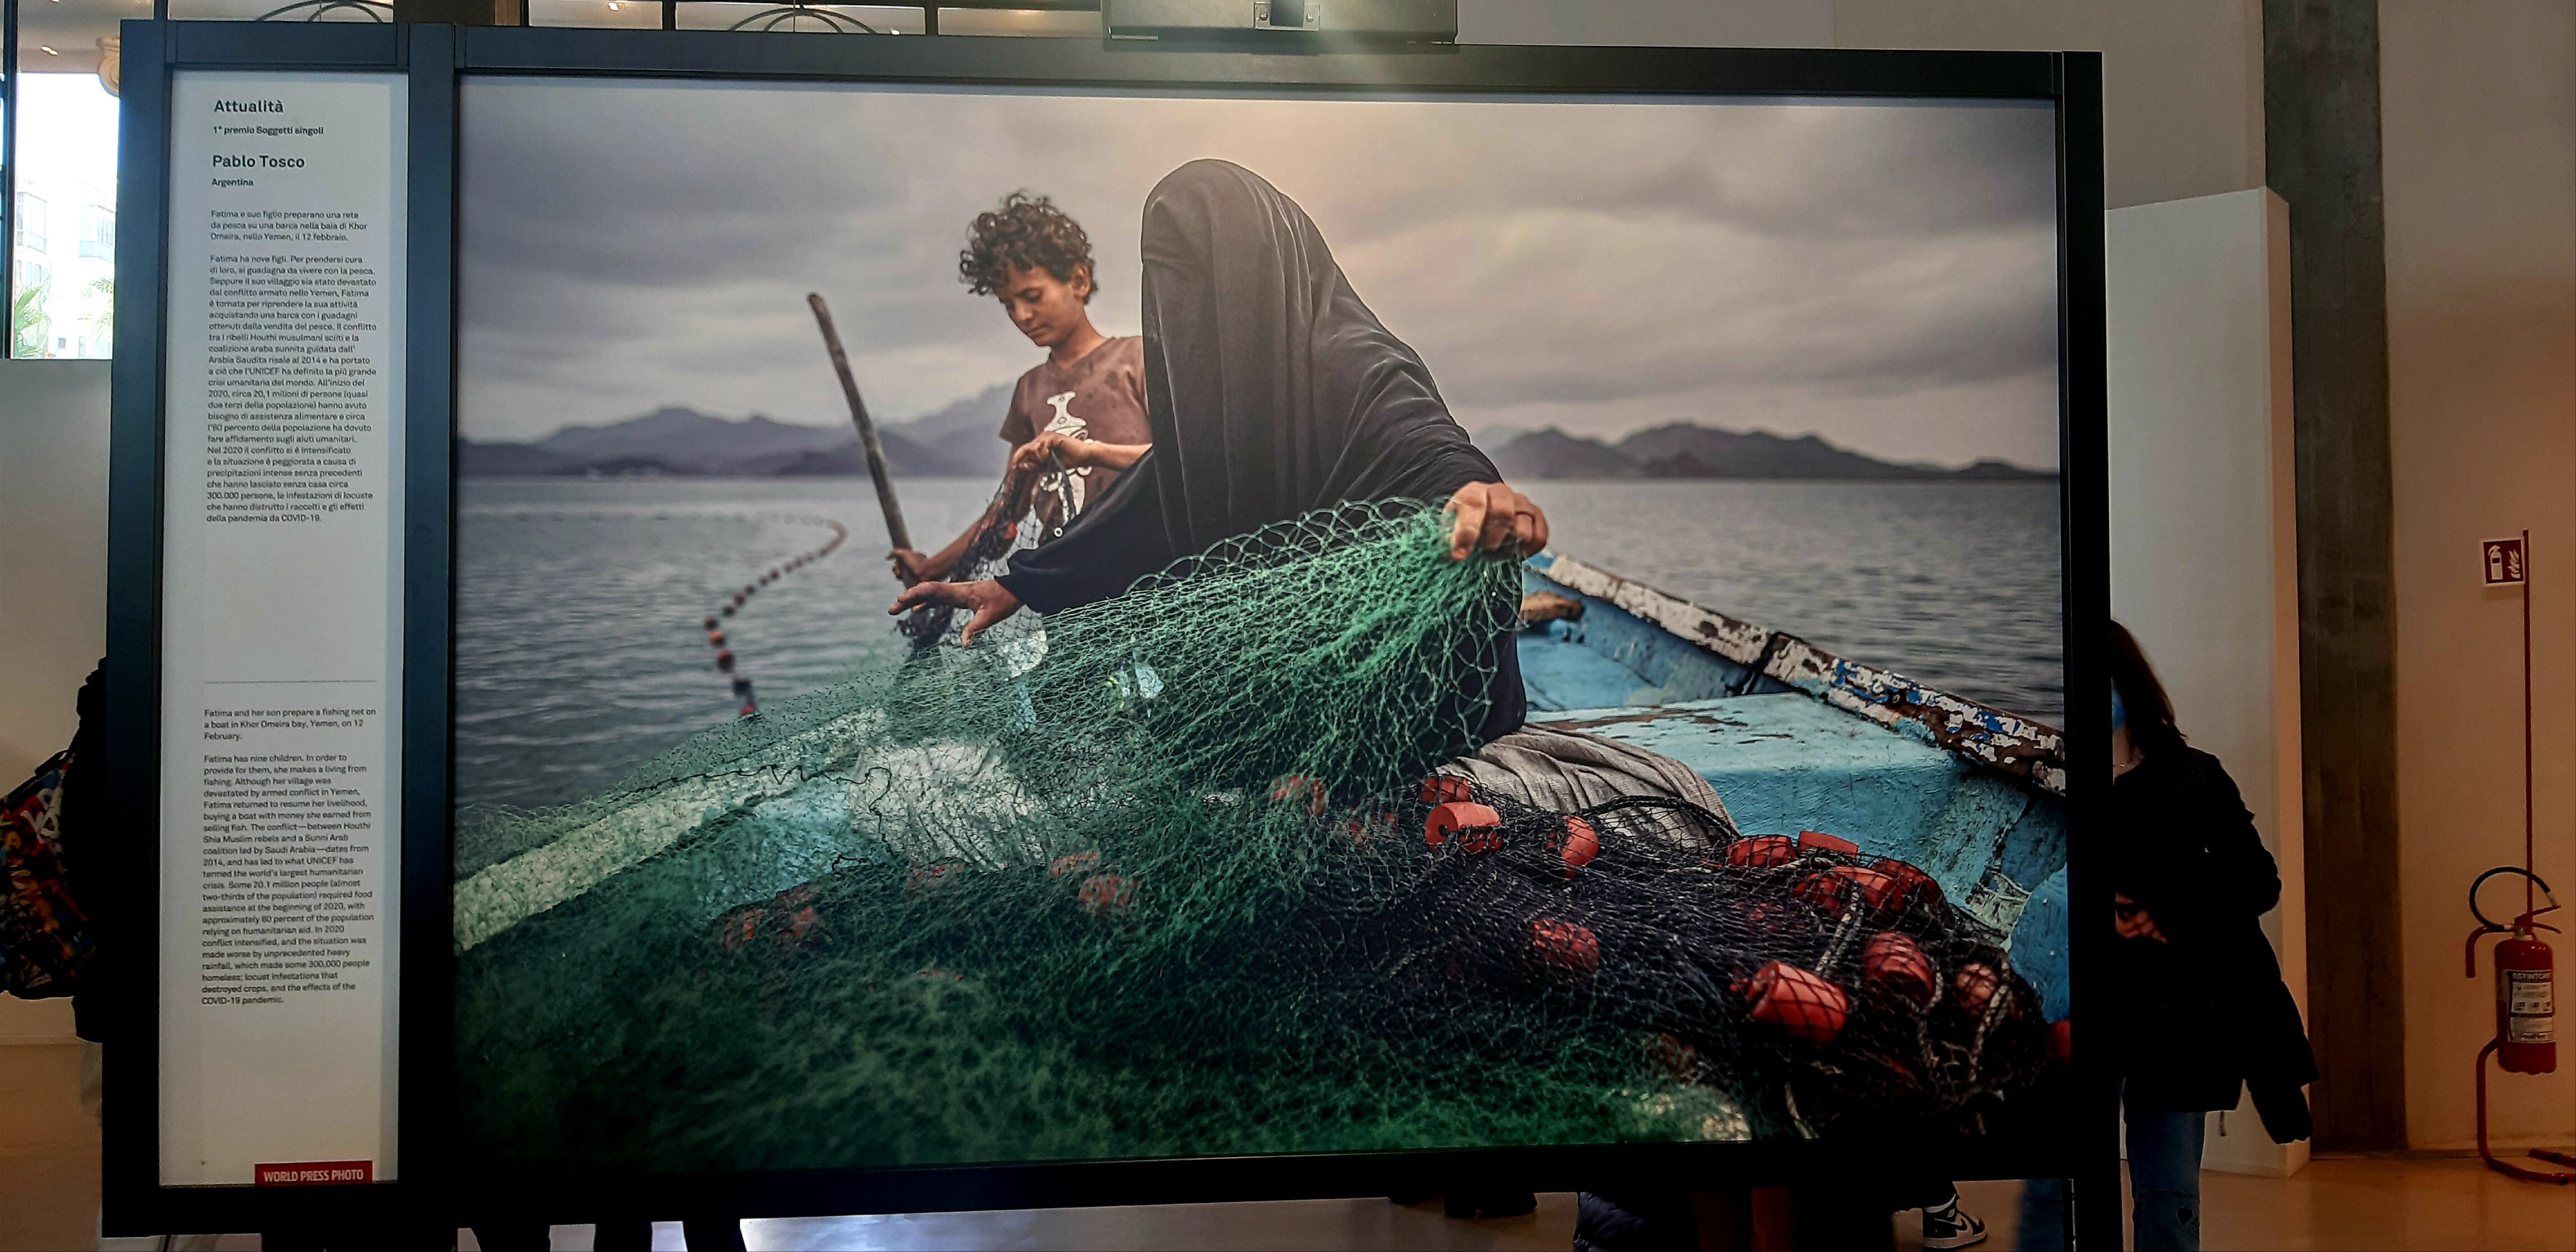 World Press Photo - Fatima and her son prepare a fishing net on a